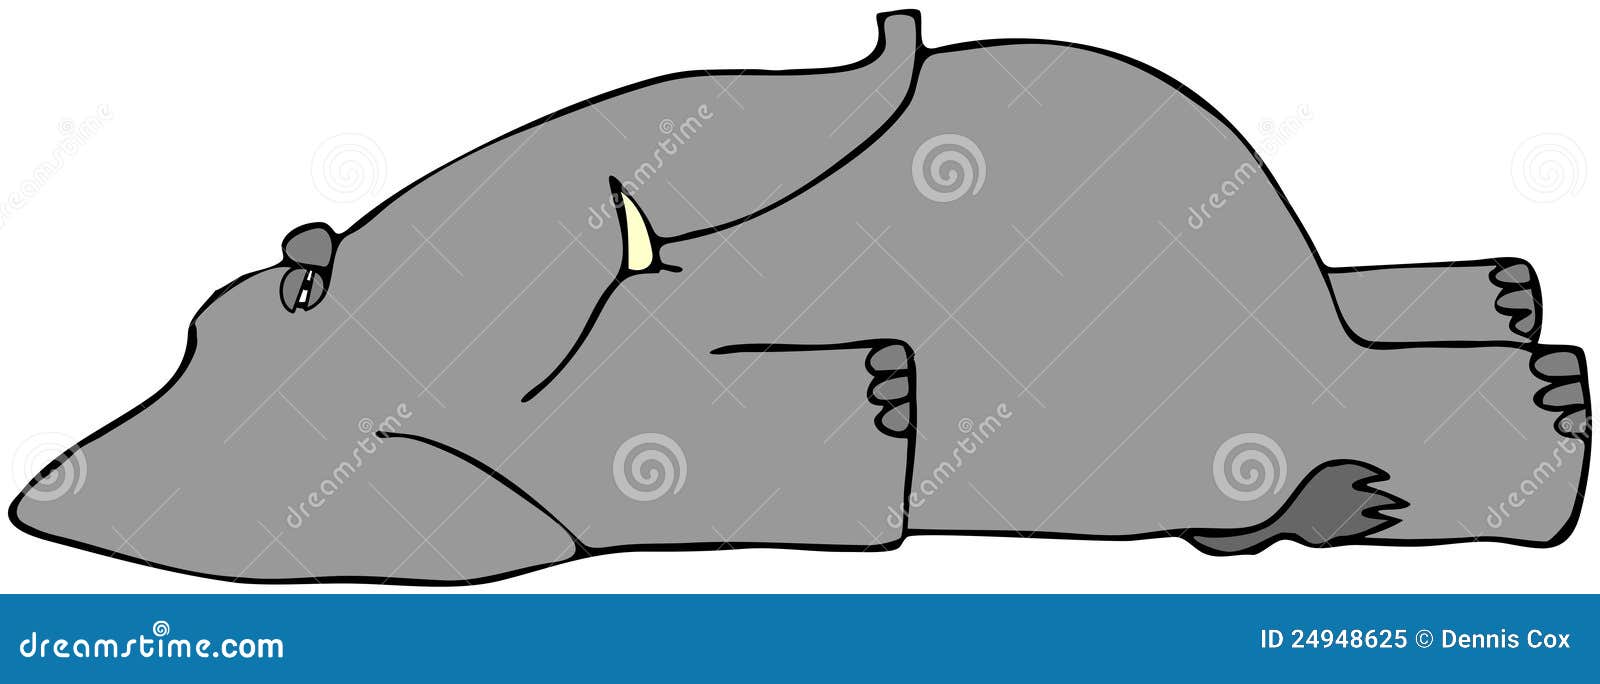 Dead Elephant stock illustration. Illustration of deceased - 24948625